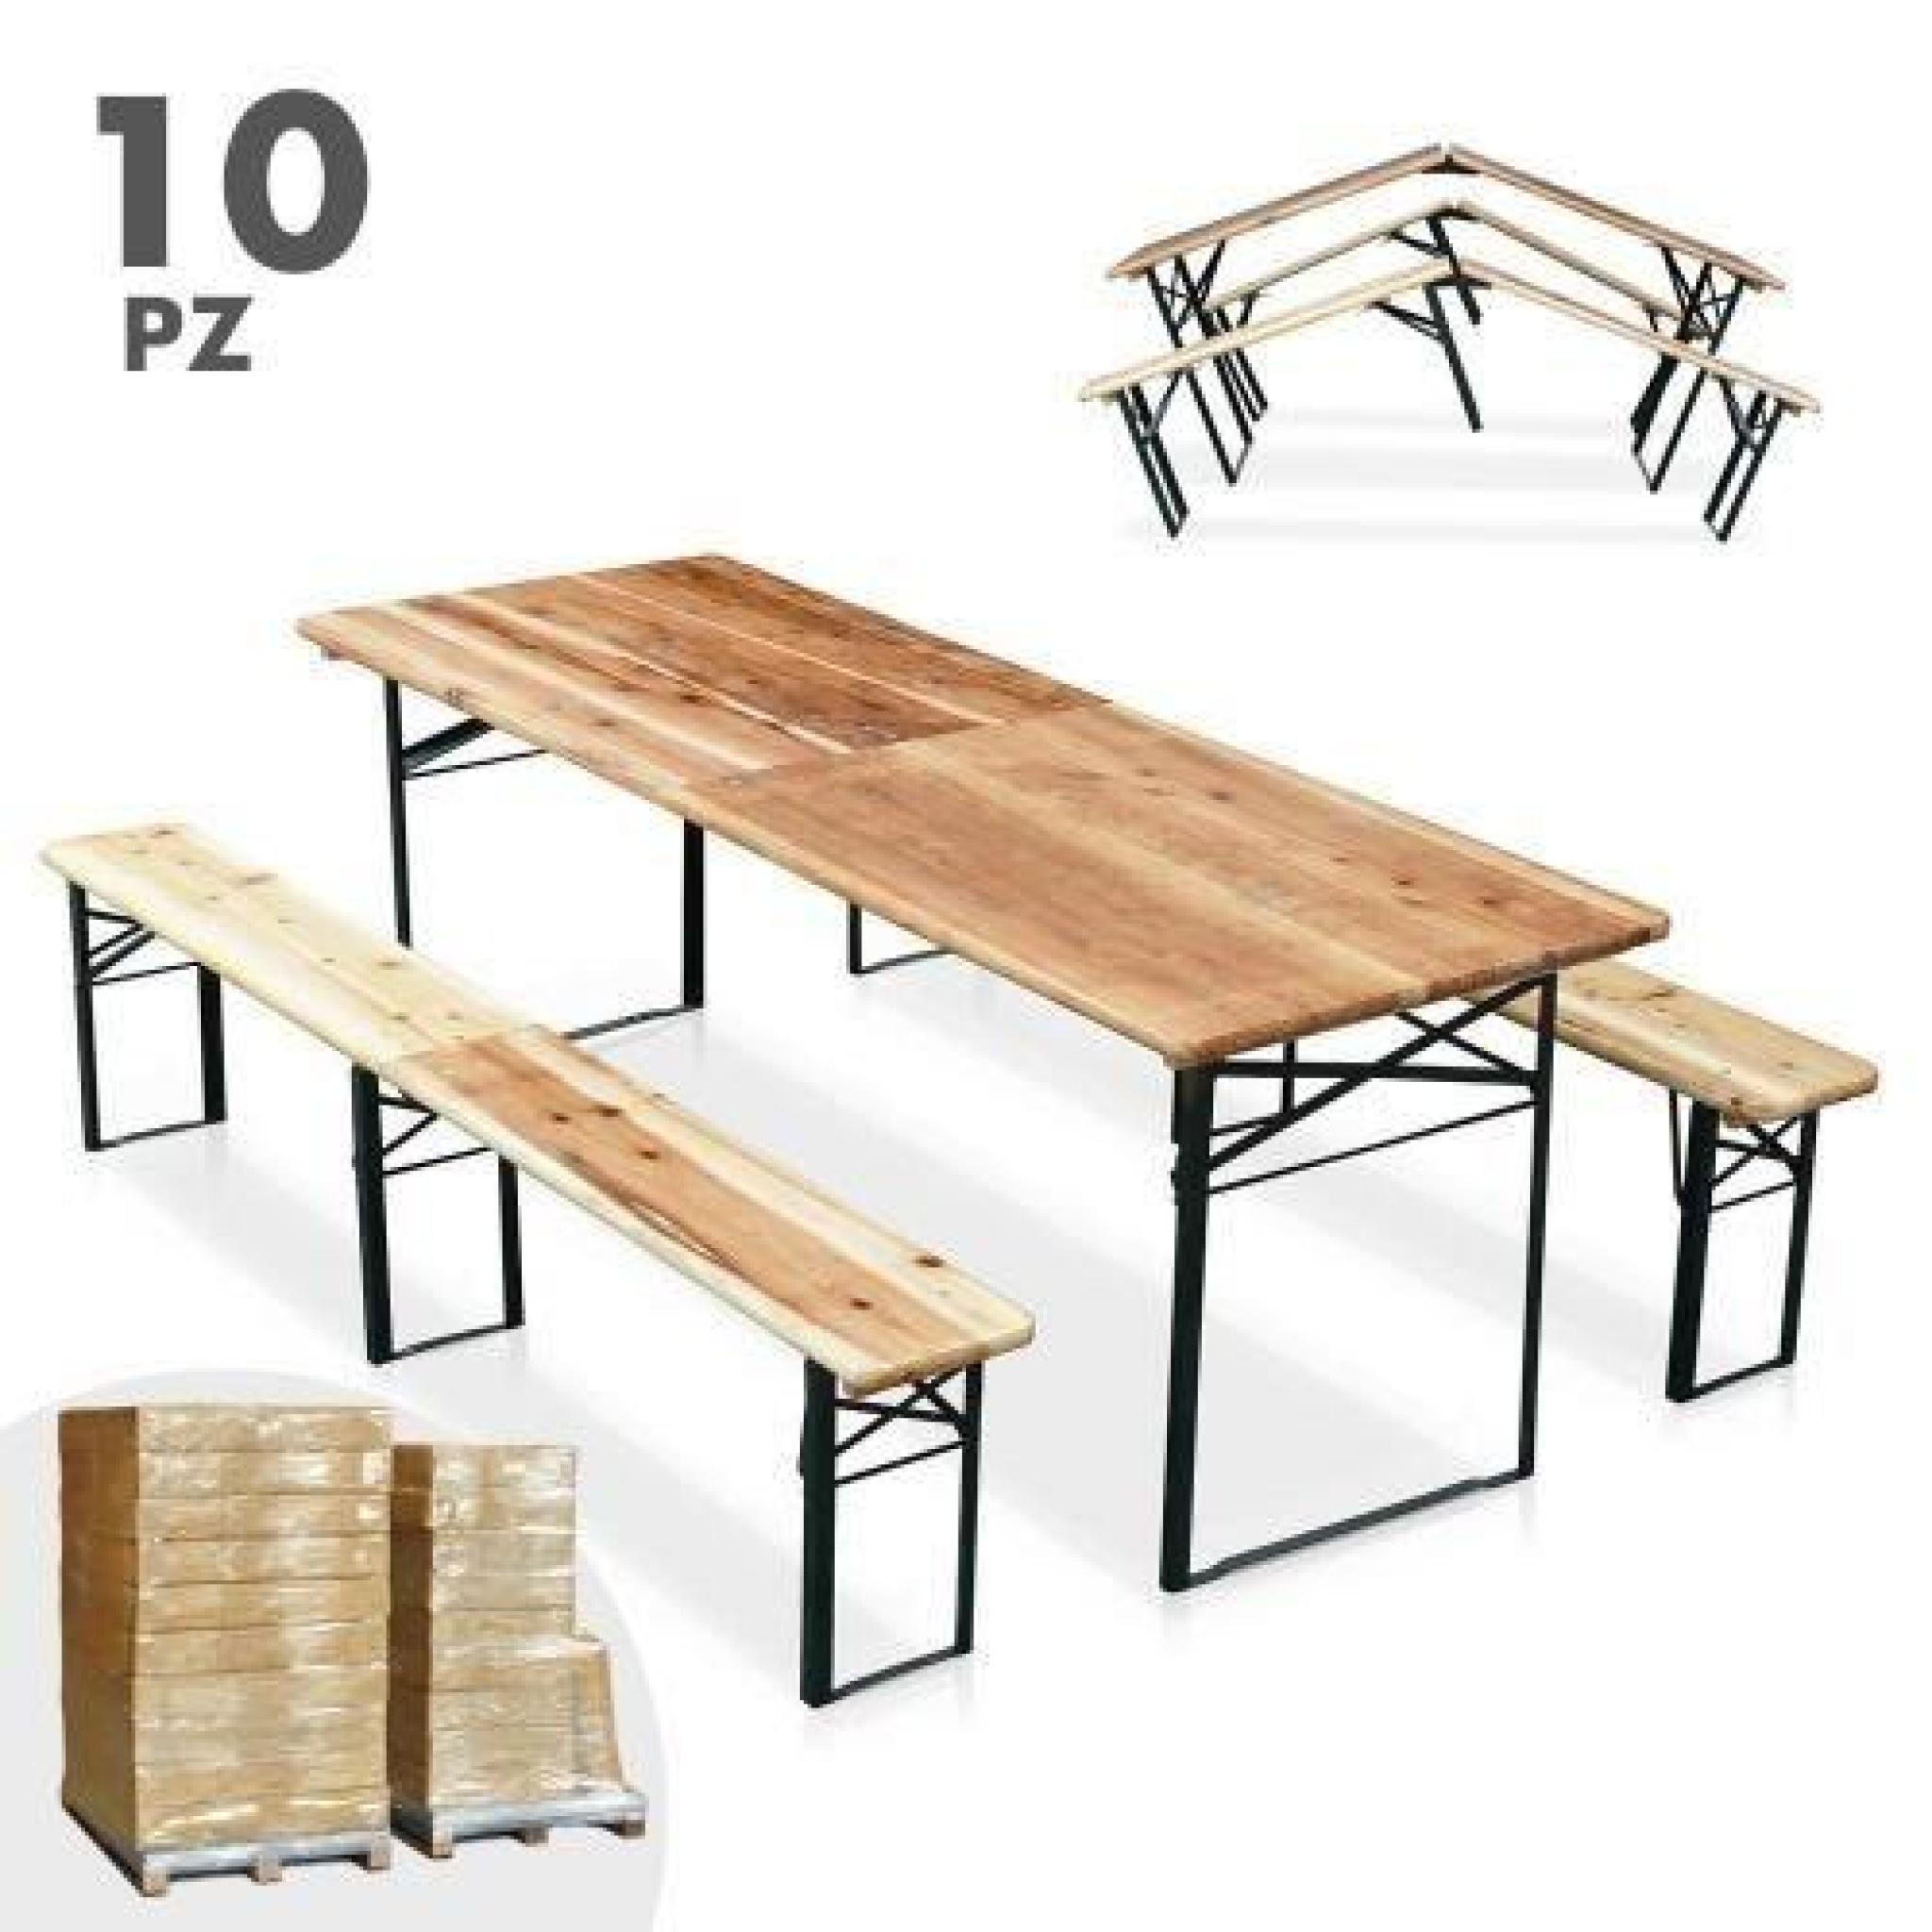 Table de brasserie pliante bancs bois ensemble 220x80 10pz